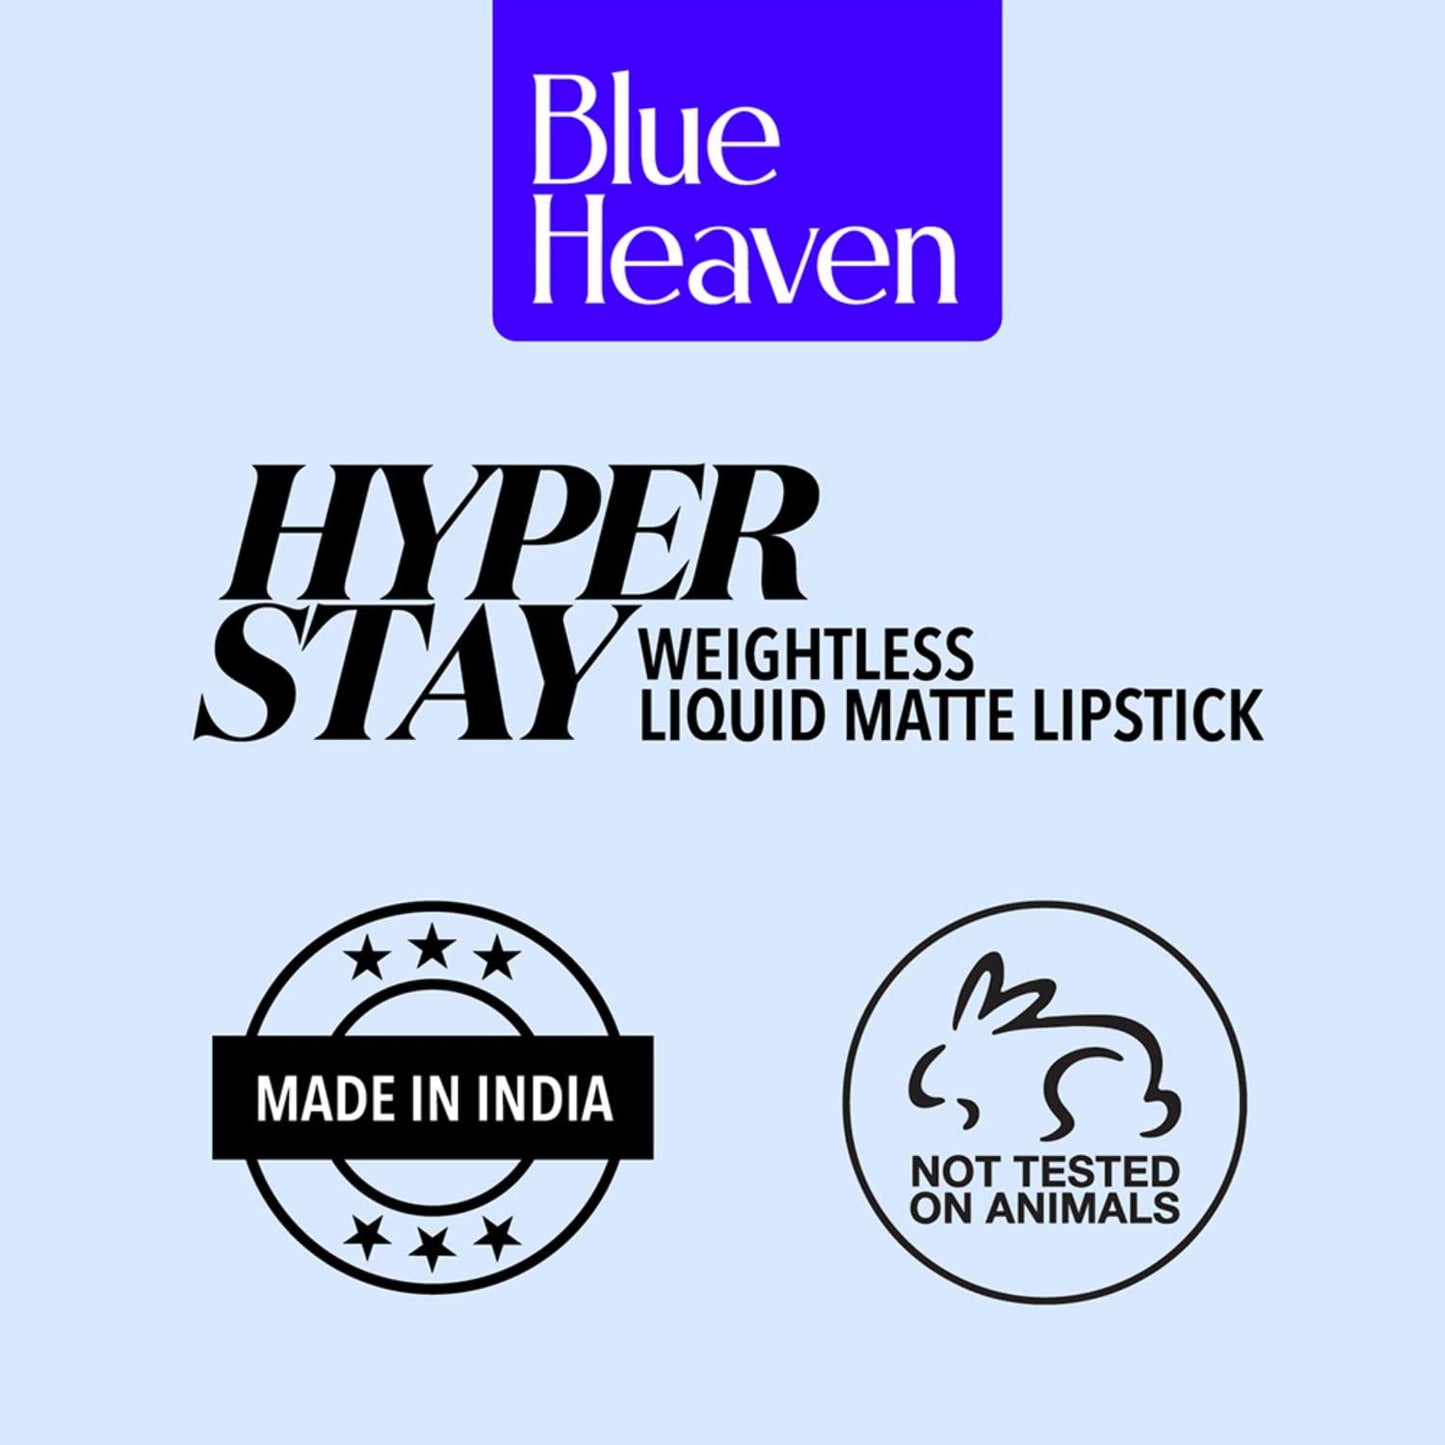 Blue Heaven Hyperstay Weightless Liquid Matte Lipstick, Smudgeproof, Transfer proof, Mystic Maroon, 6ml